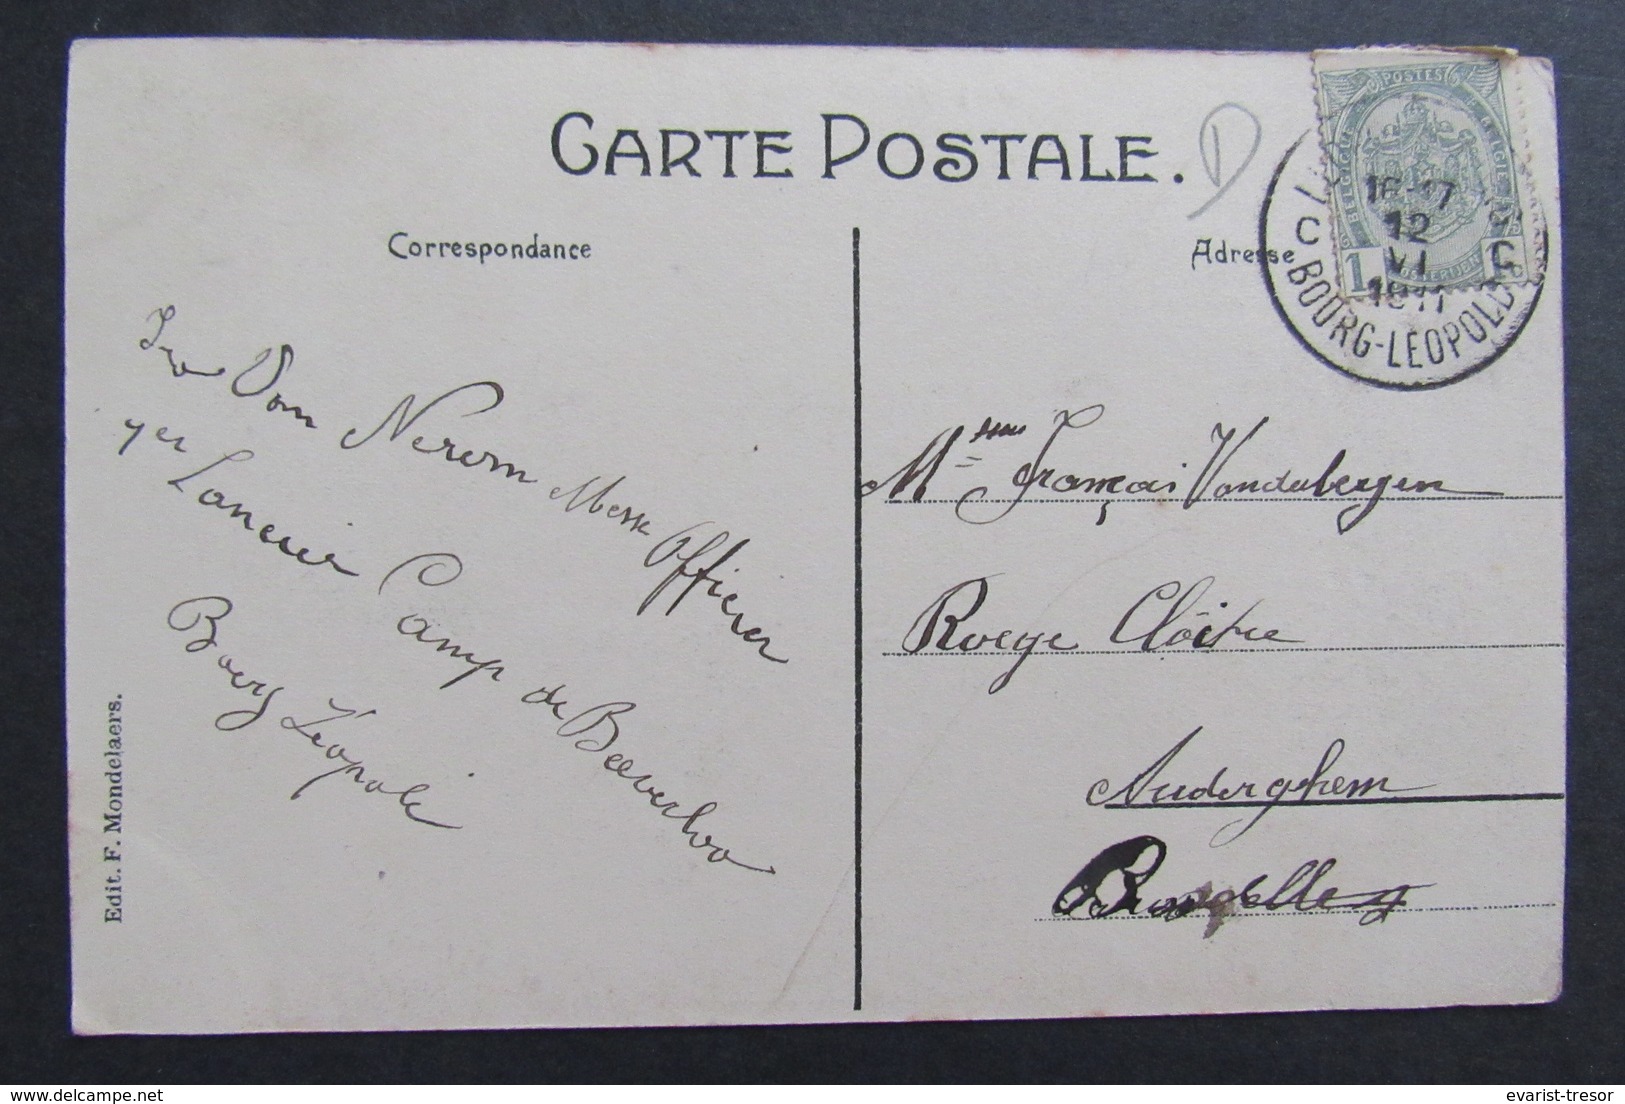 Carte Postale Leopoldsburg Rue Cauwenberghe 1911 - Leopoldsburg